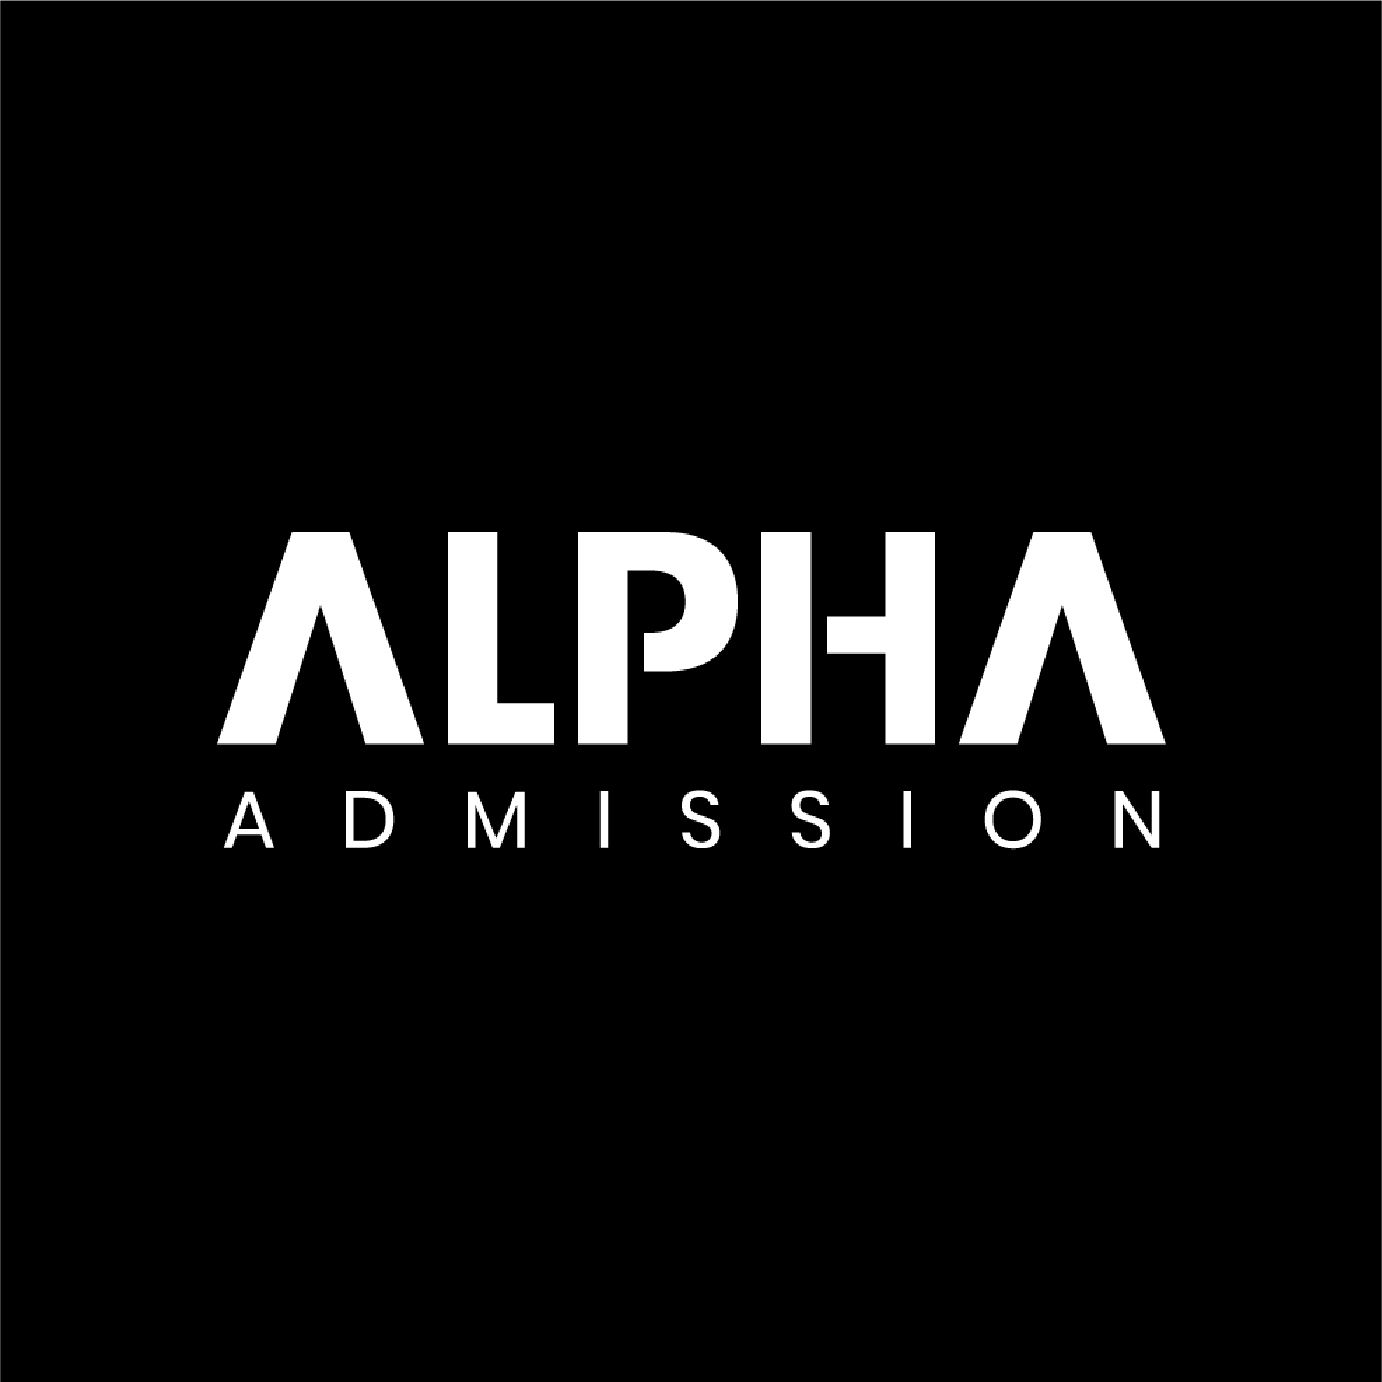 ALPHA ADMISSION logo